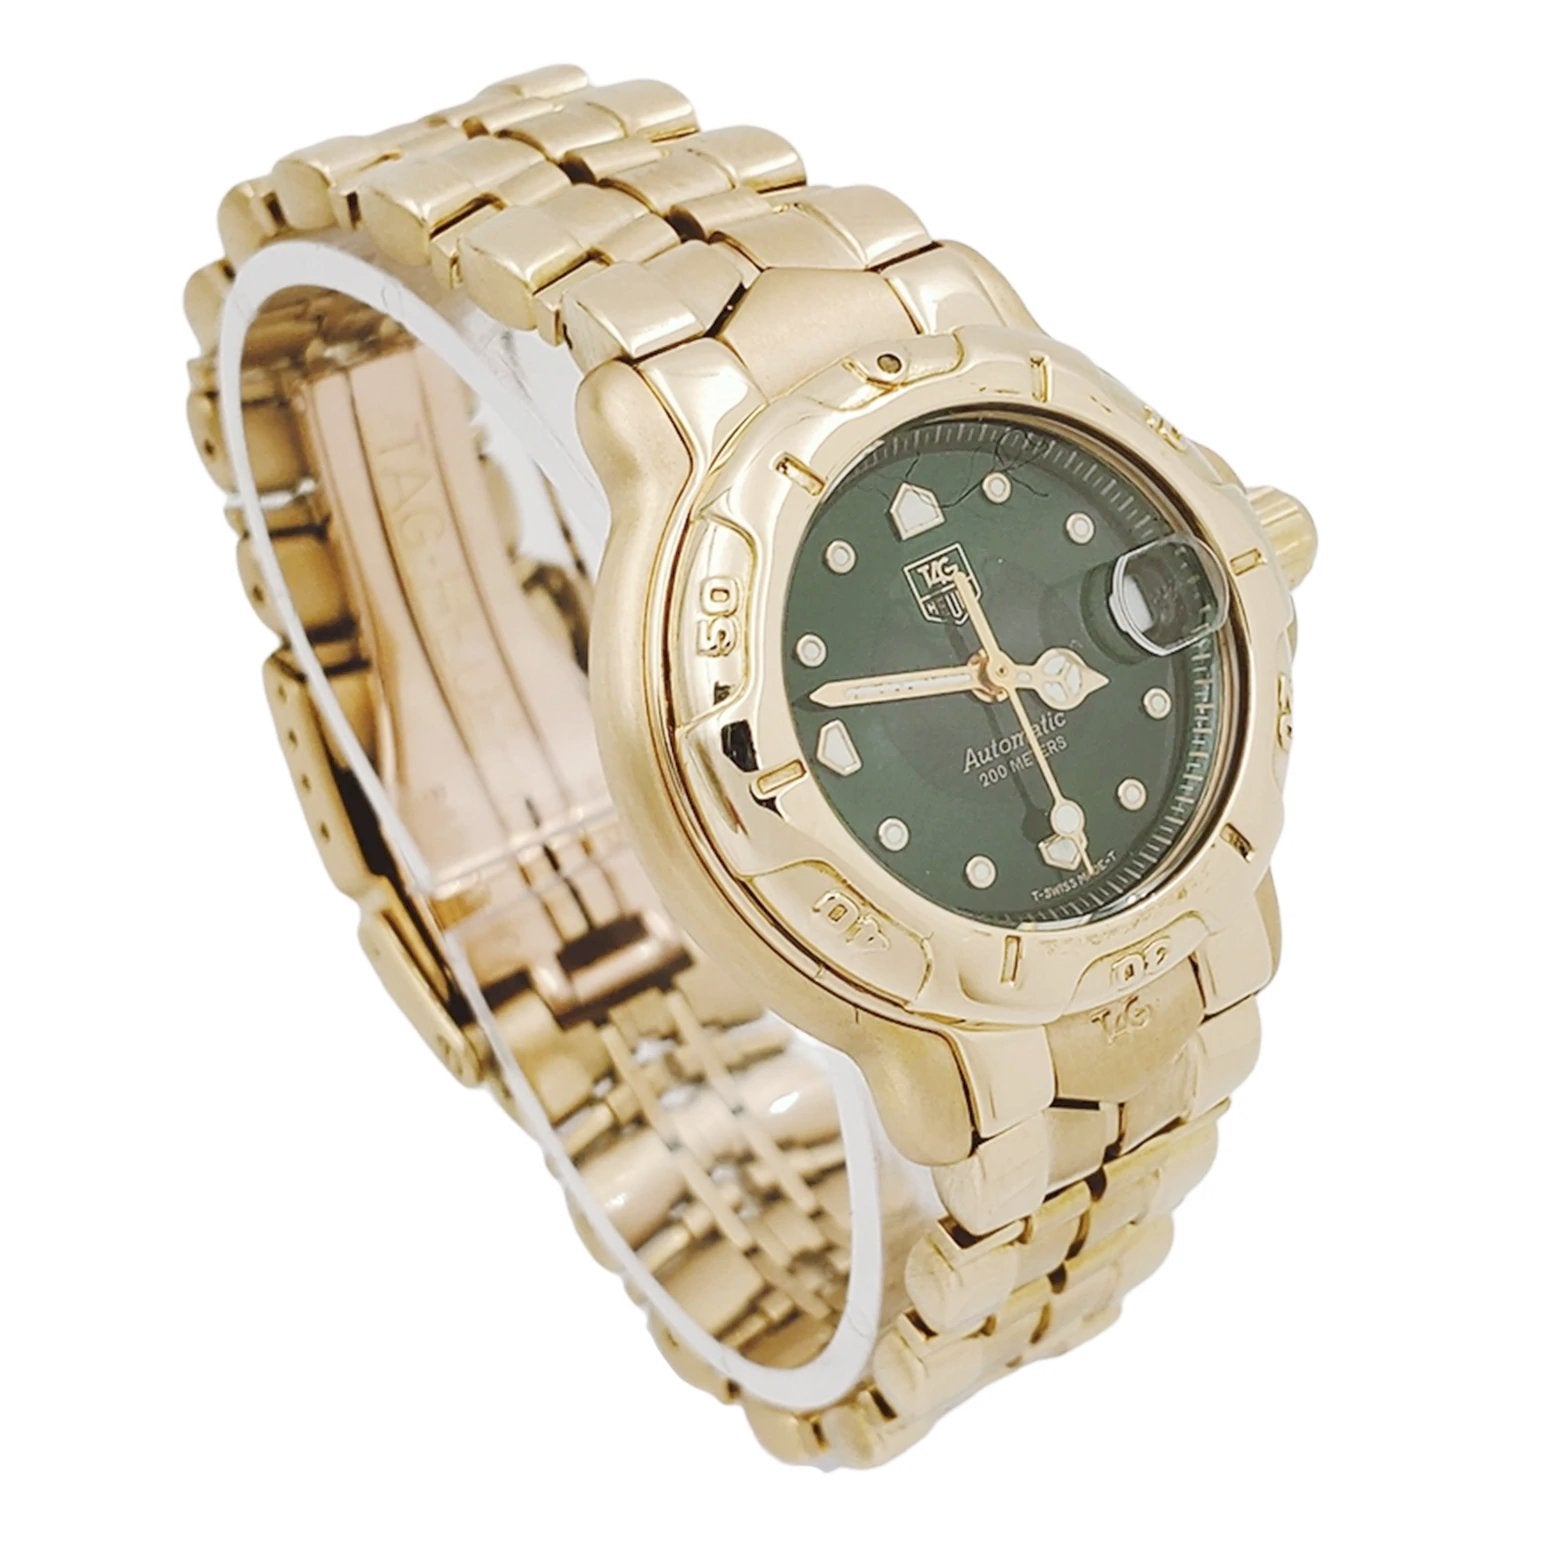 Tag Heuer Link WAT1452.BB0955 Women's 18K Yellow Gold Quartz Watch